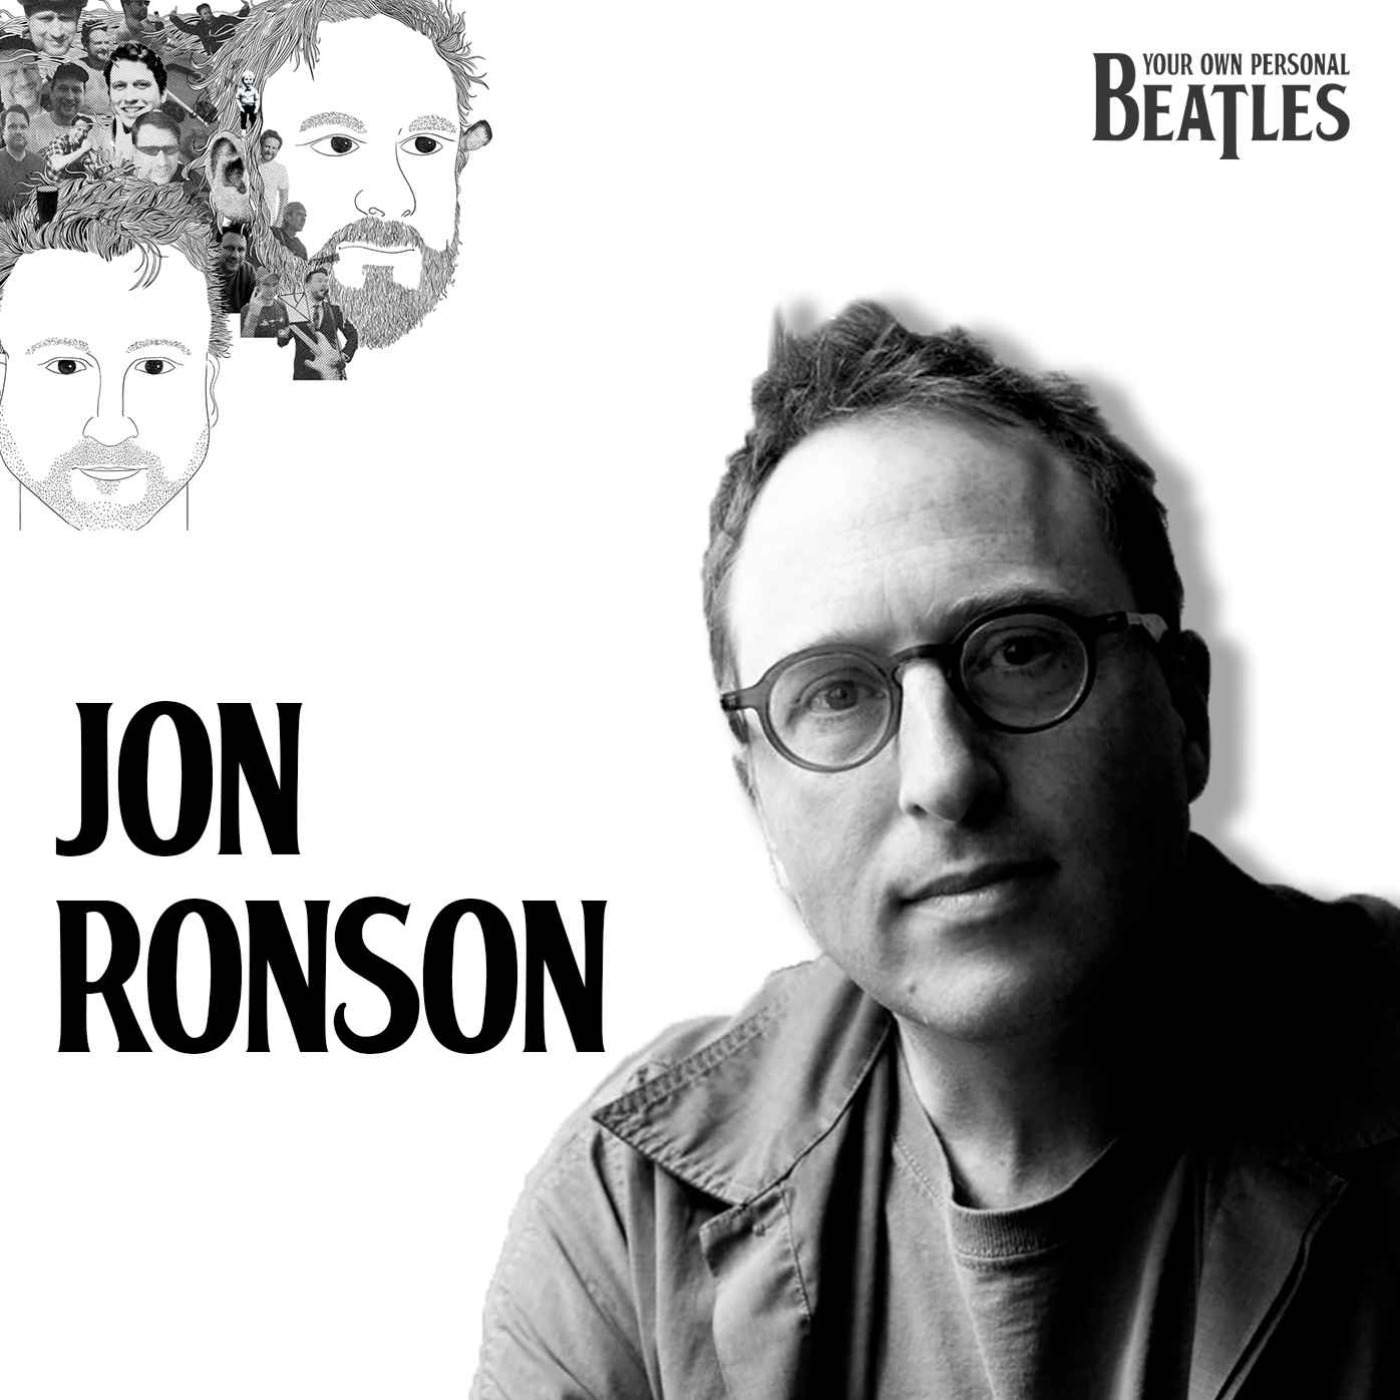 Jon Ronson's Personal Beatles